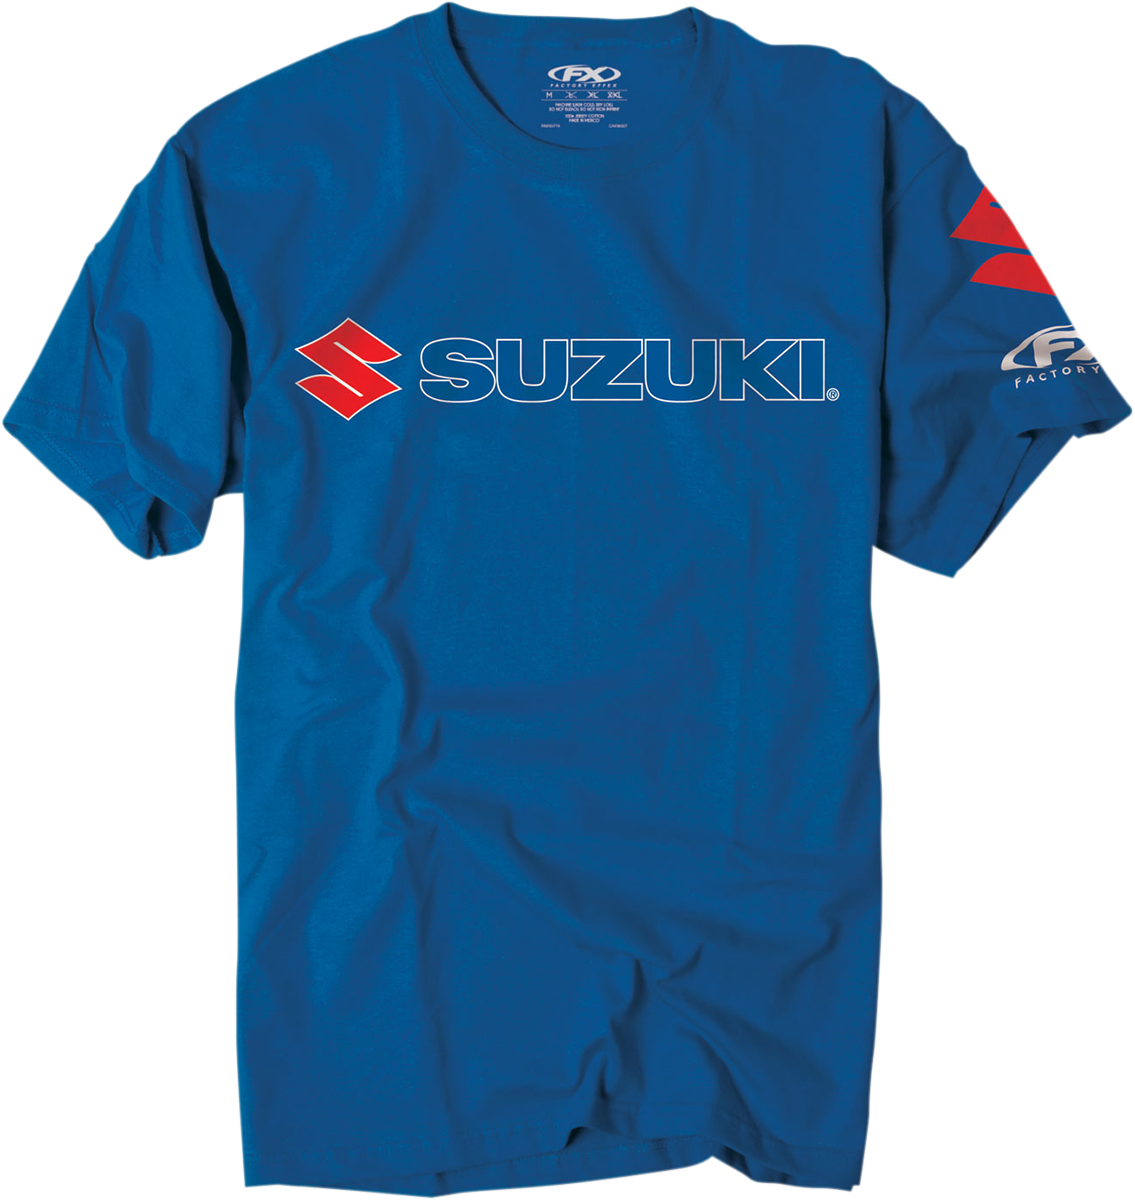 FACTORY EFFEX Suzuki Team T-Shirt - Blue - Large 15-88462